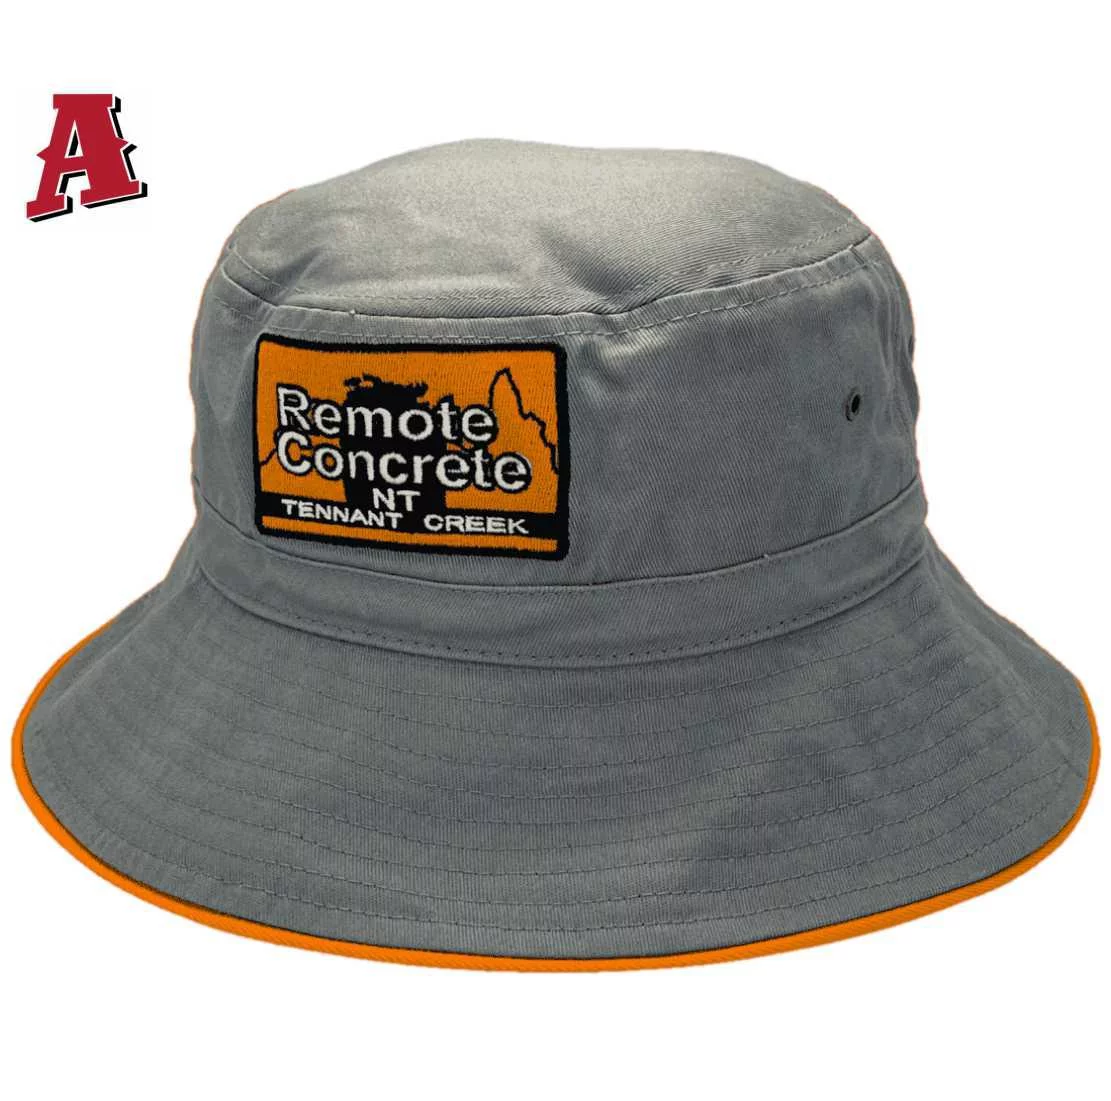 Remote Concrete Tennant Creek NT Aussie Bucket Hat with Adjustable crown 56cm-60cm with Optional Brim Size 5cm - 7.5cm Grey Orange